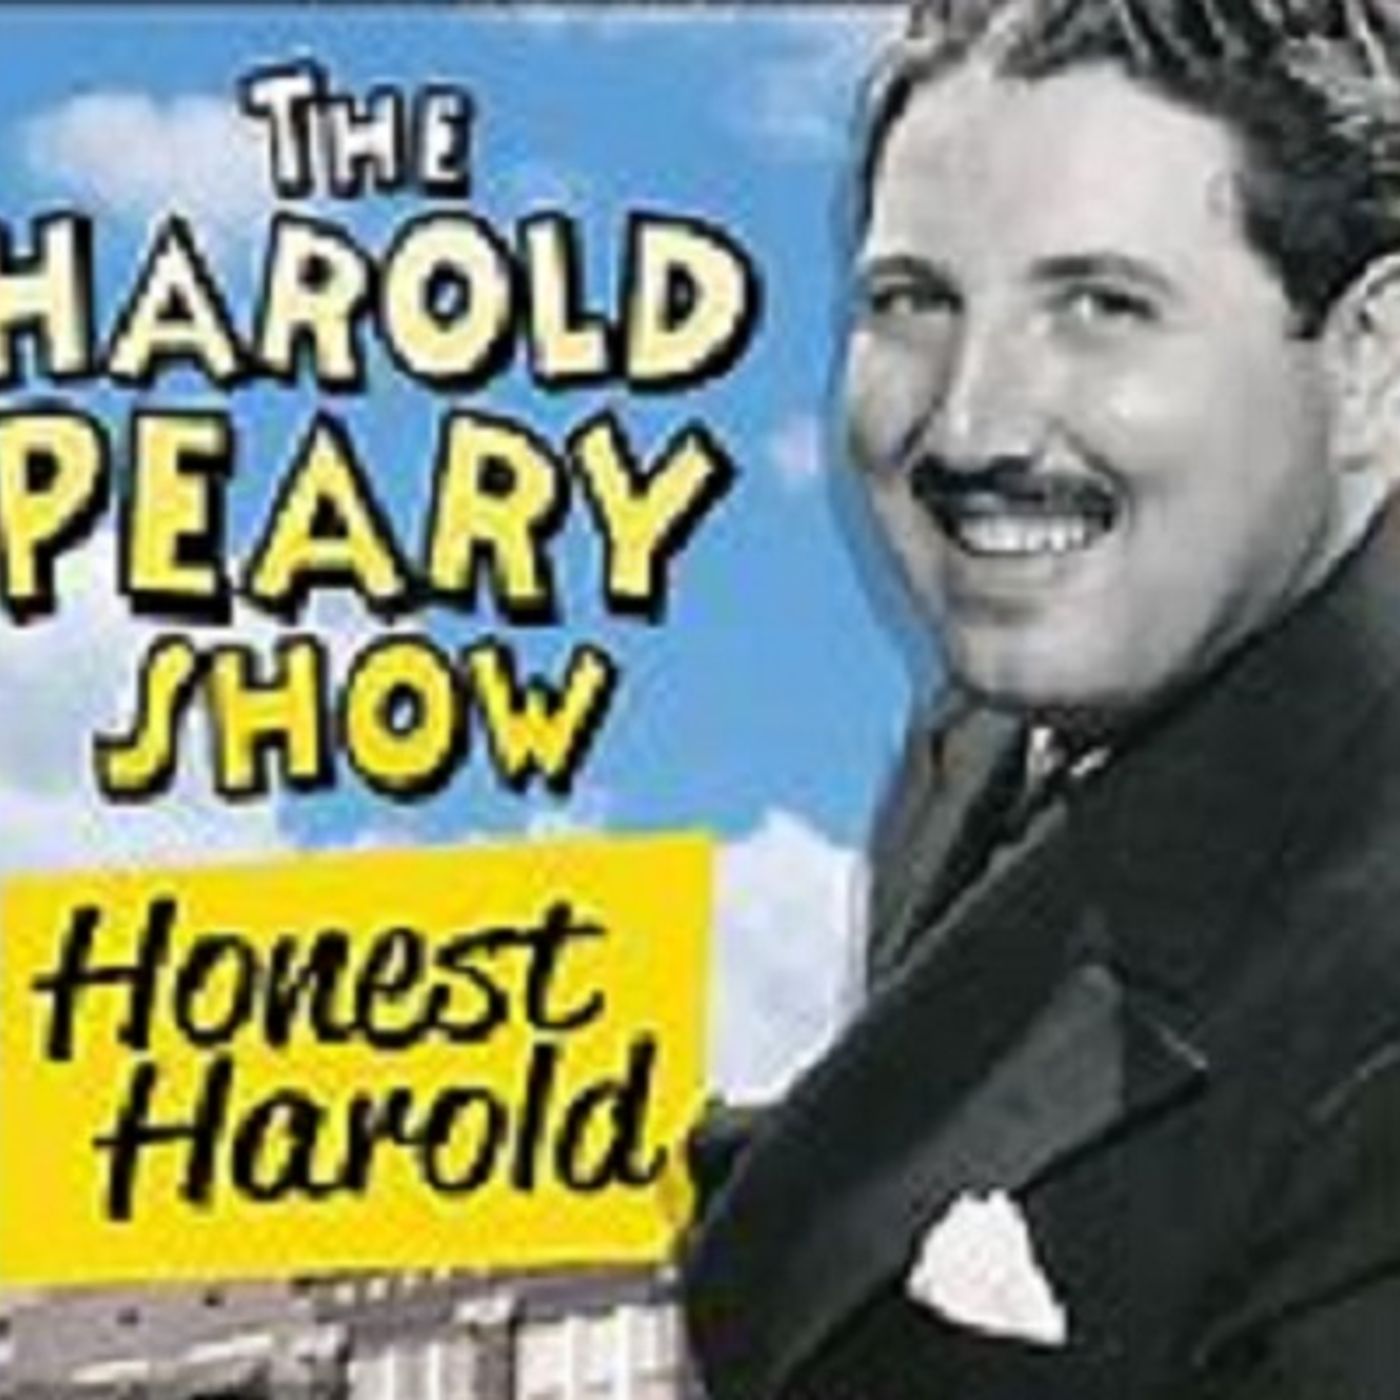 Harold Peary 50-10-18 ep05 The Runaway Boy